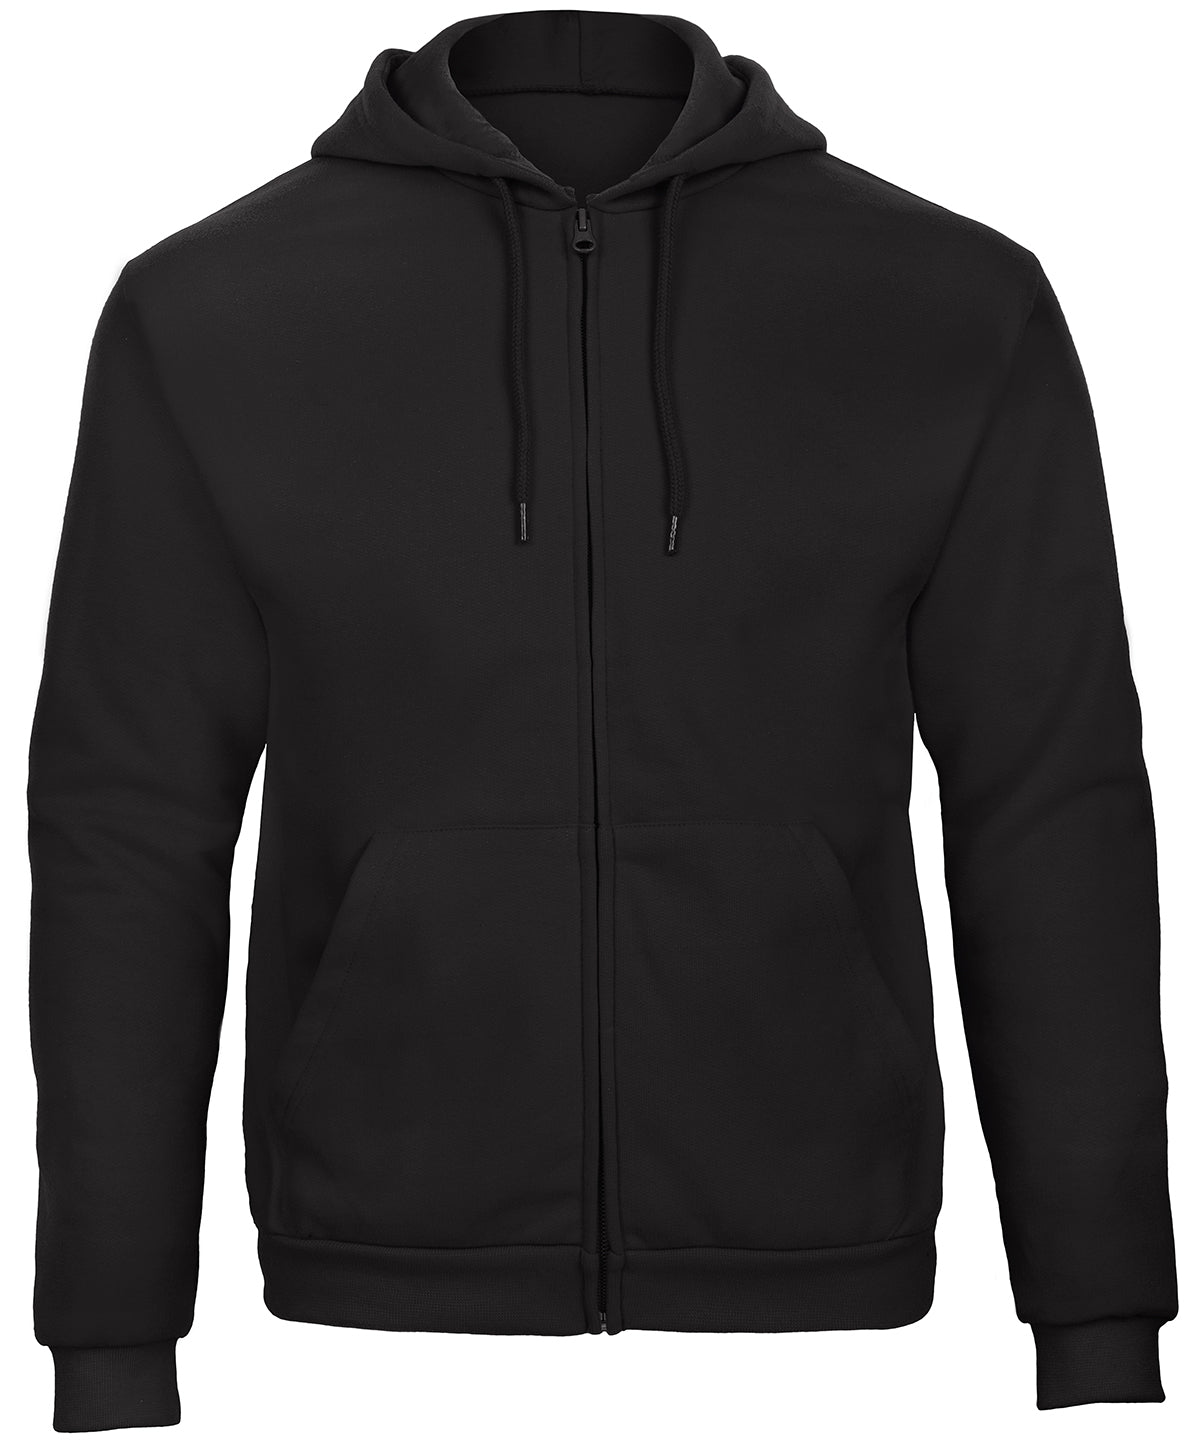 Personalised Hoodies - Dark Grey B&C Collection B&C ID.205 50/50 sweatshirt